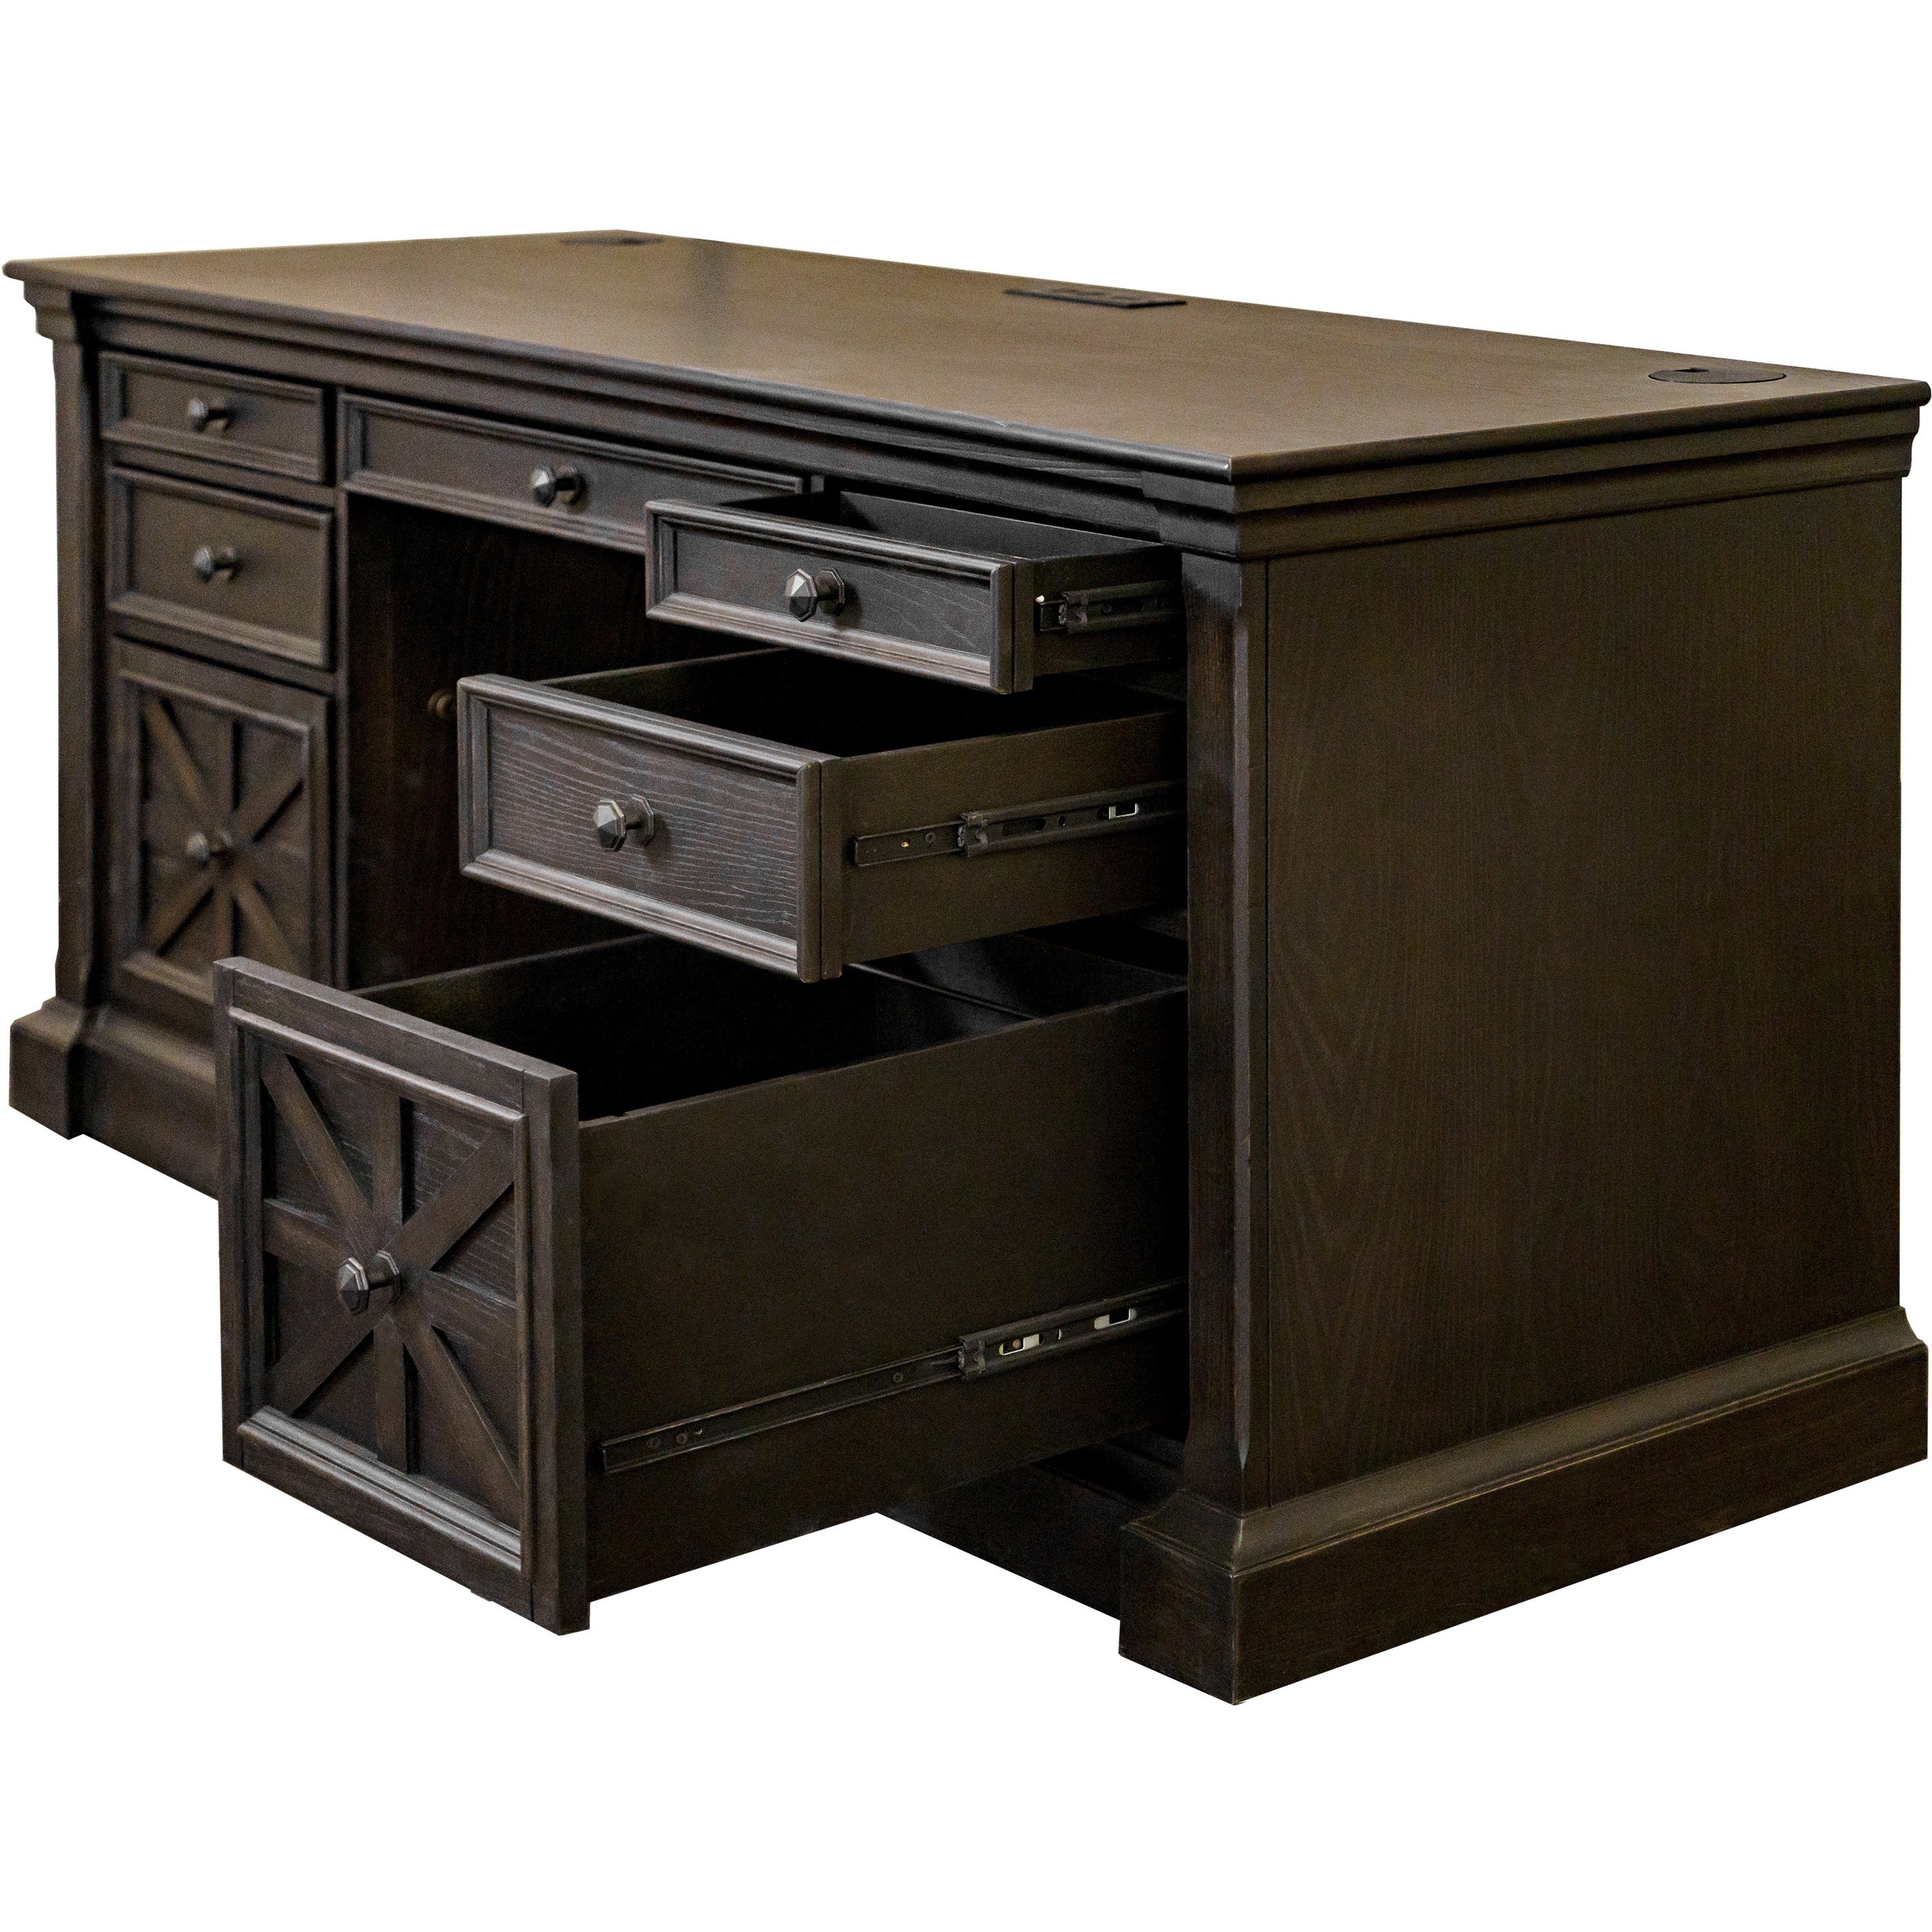 martin-kingston-office-desking-unit-66-x-2230-7-x-utility-file-drawers-material-wood-finish-dark-chocolate-rub-through_mrtimkn689 - 4